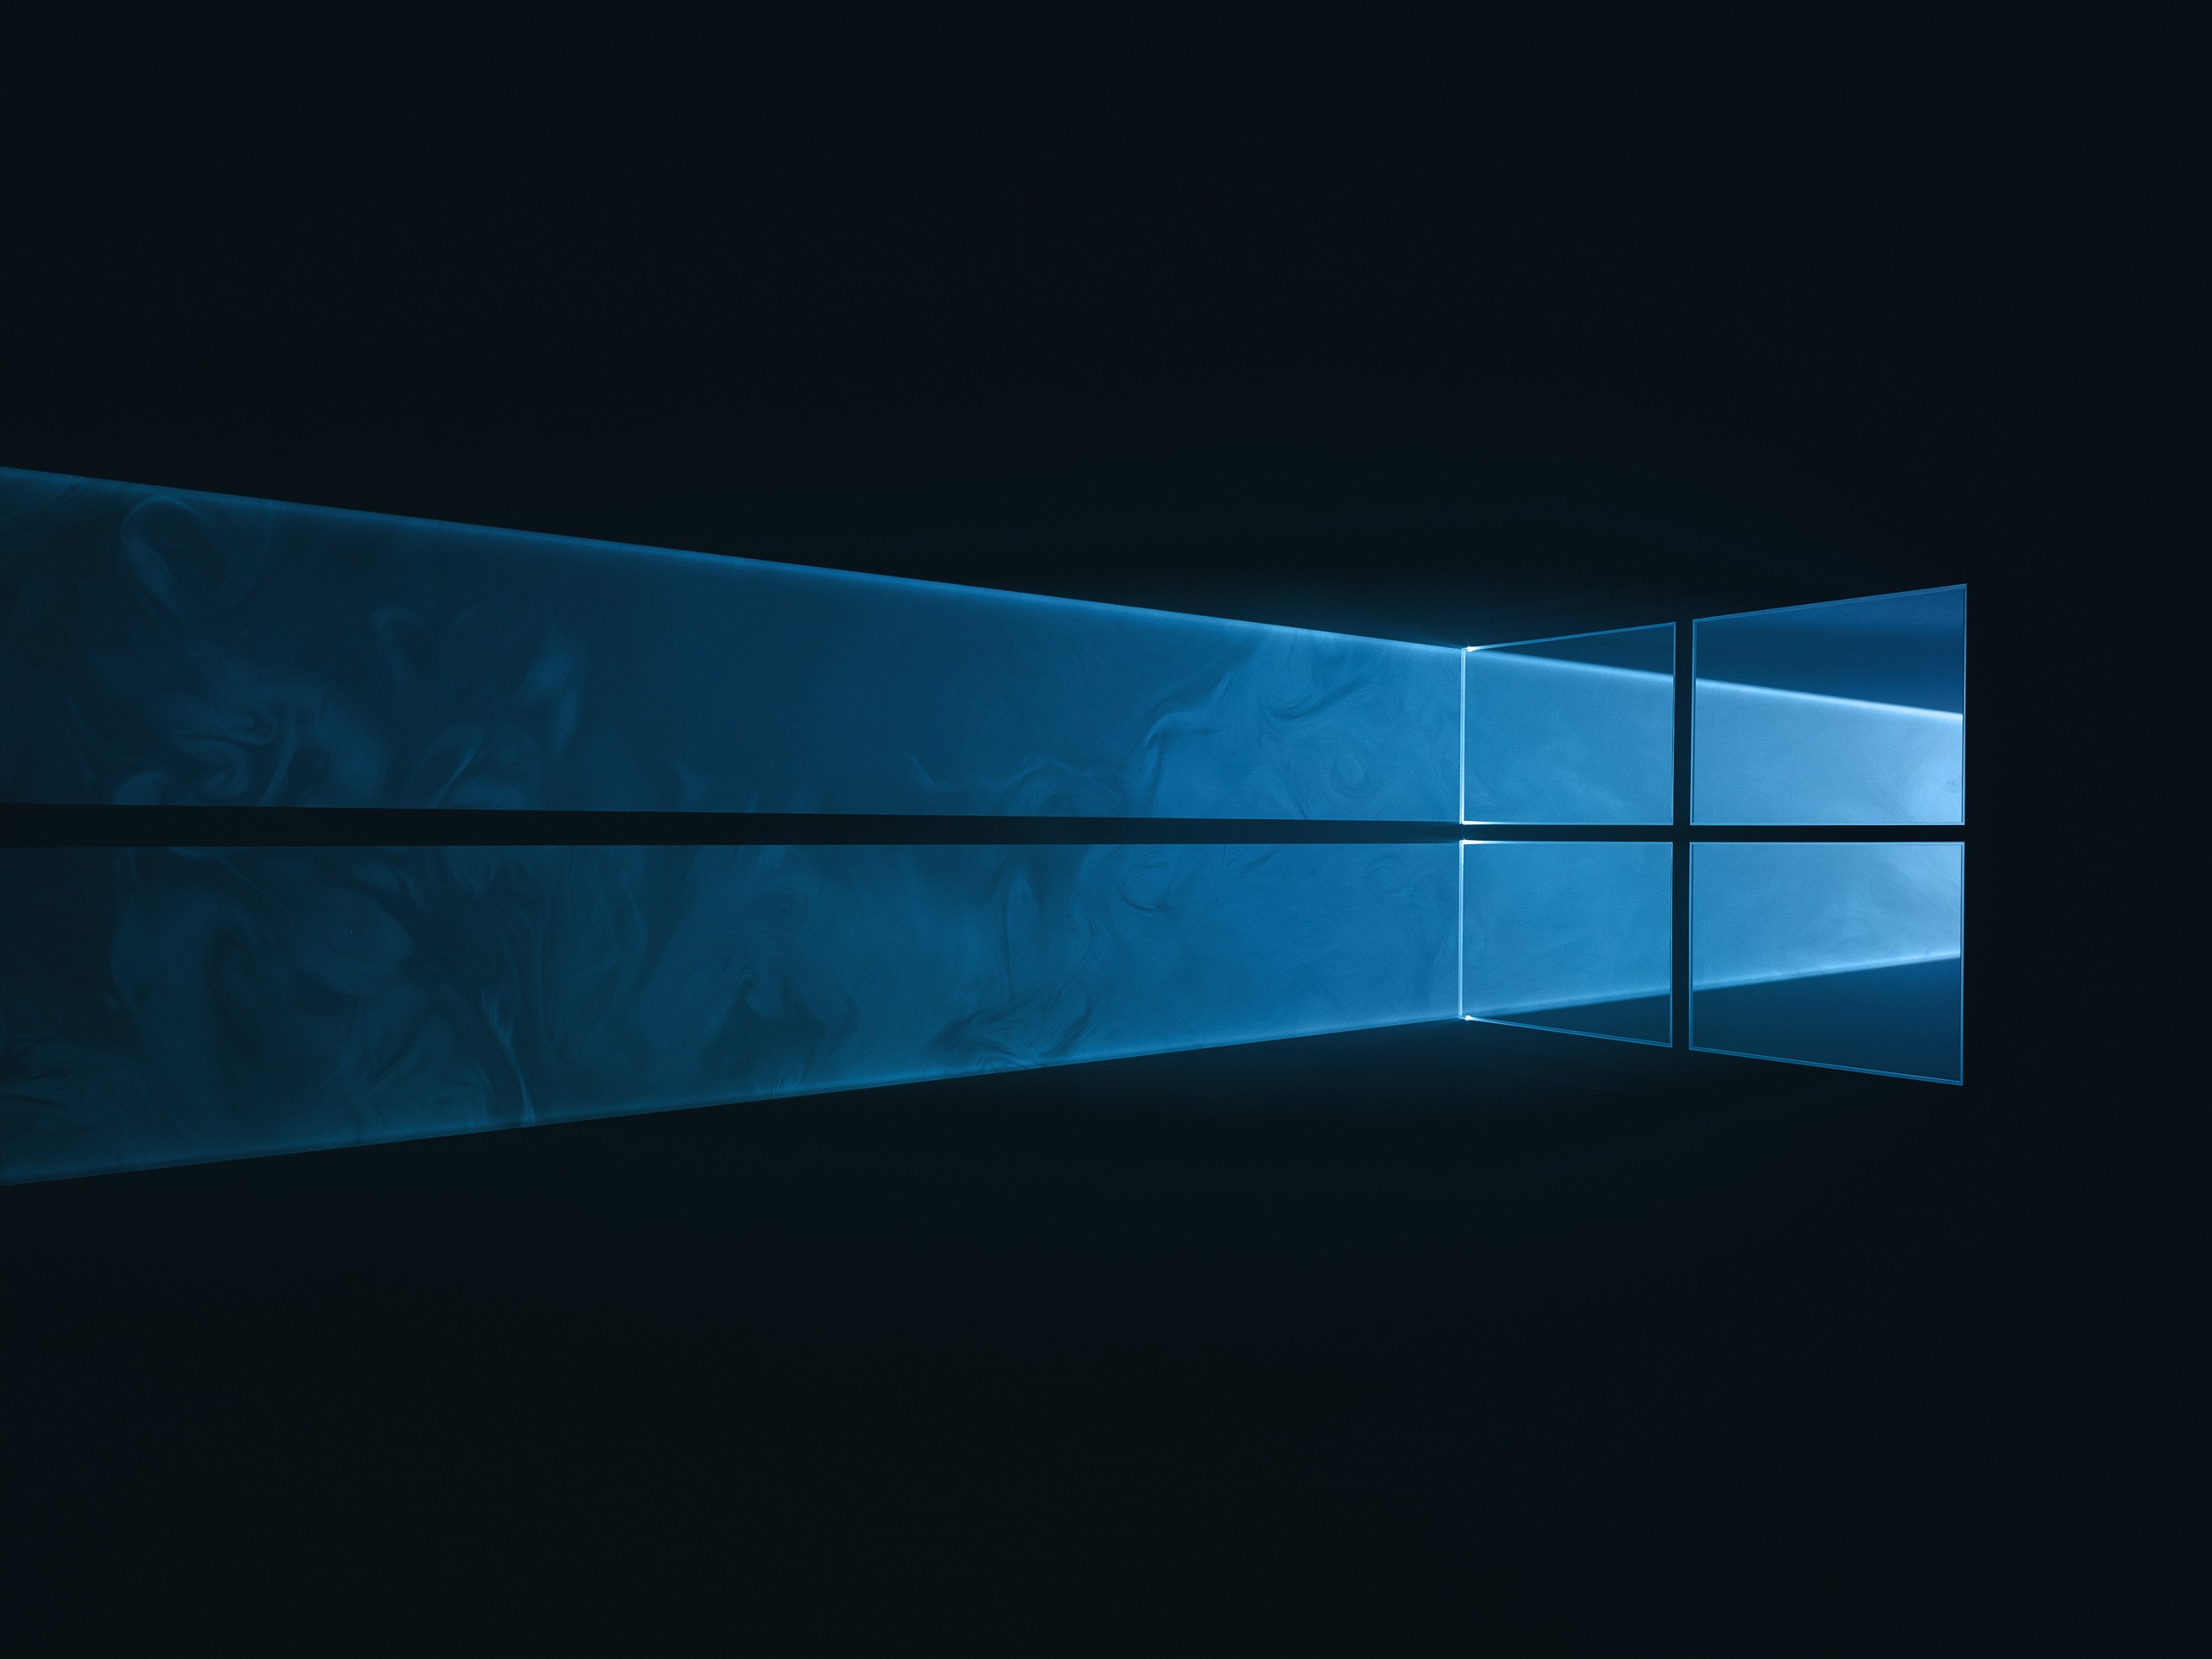 General 2560x1920 Windows 10 abstract GMUNK Microsoft Windows logo simple background digital art night mode